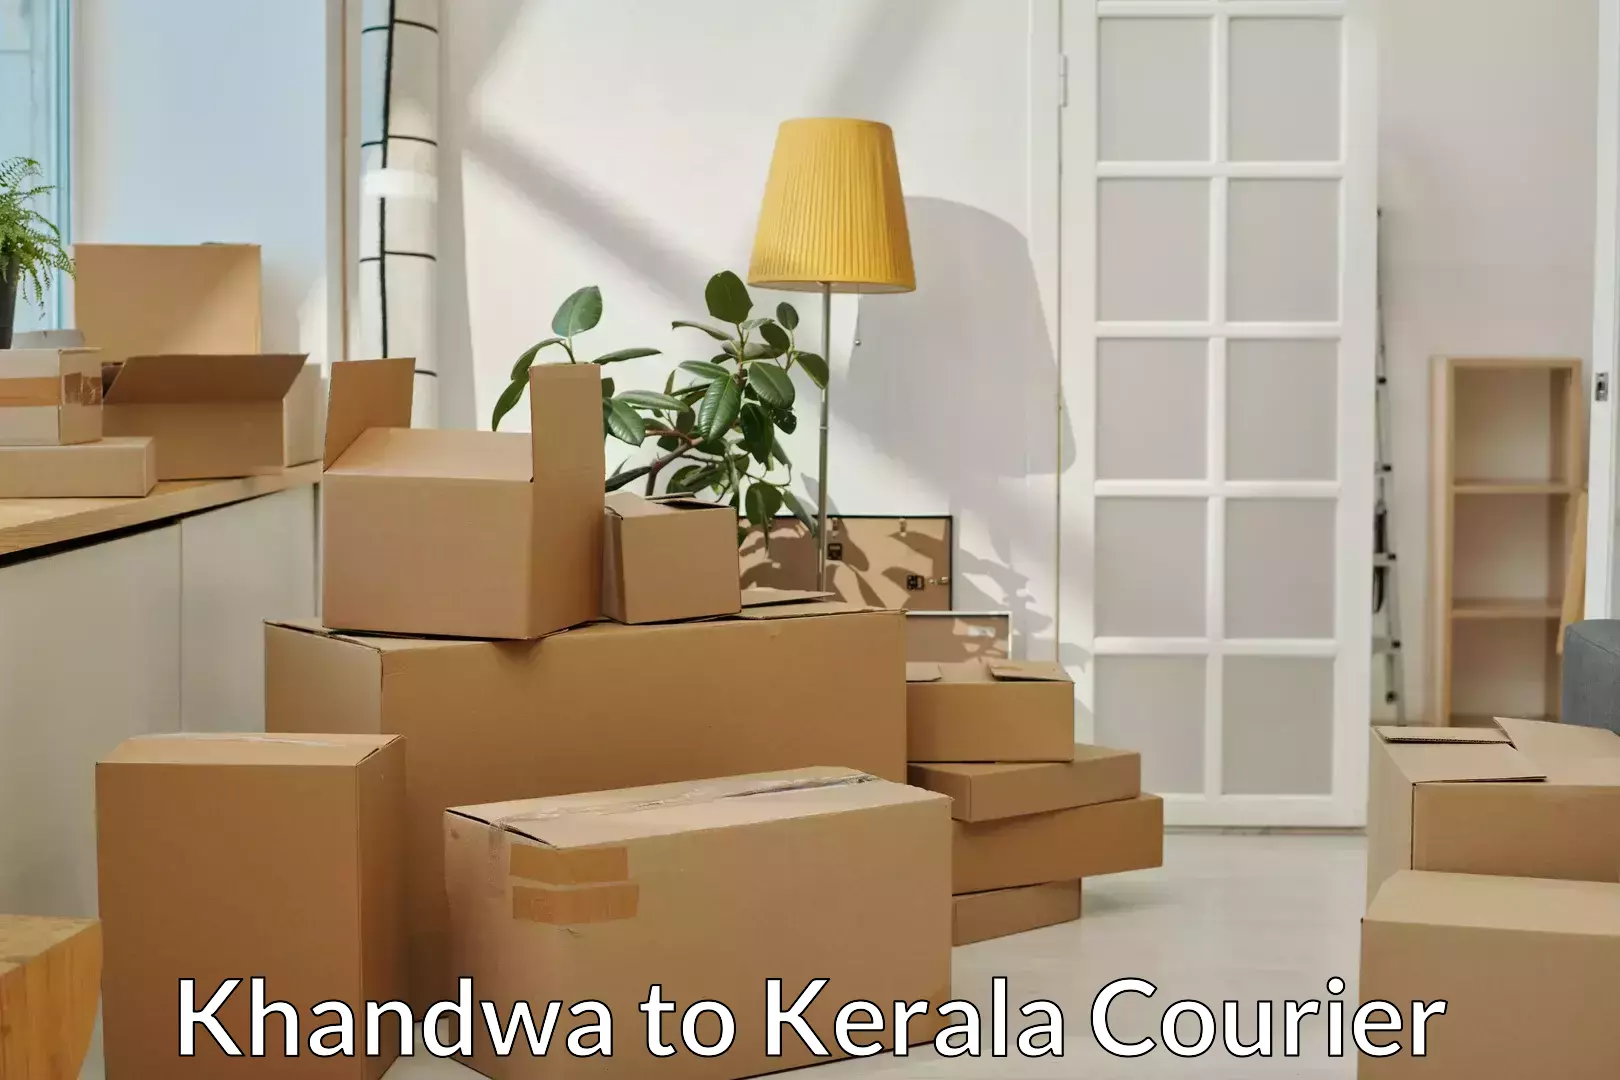 Furniture delivery service Khandwa to Mahatma Gandhi University Kottayam